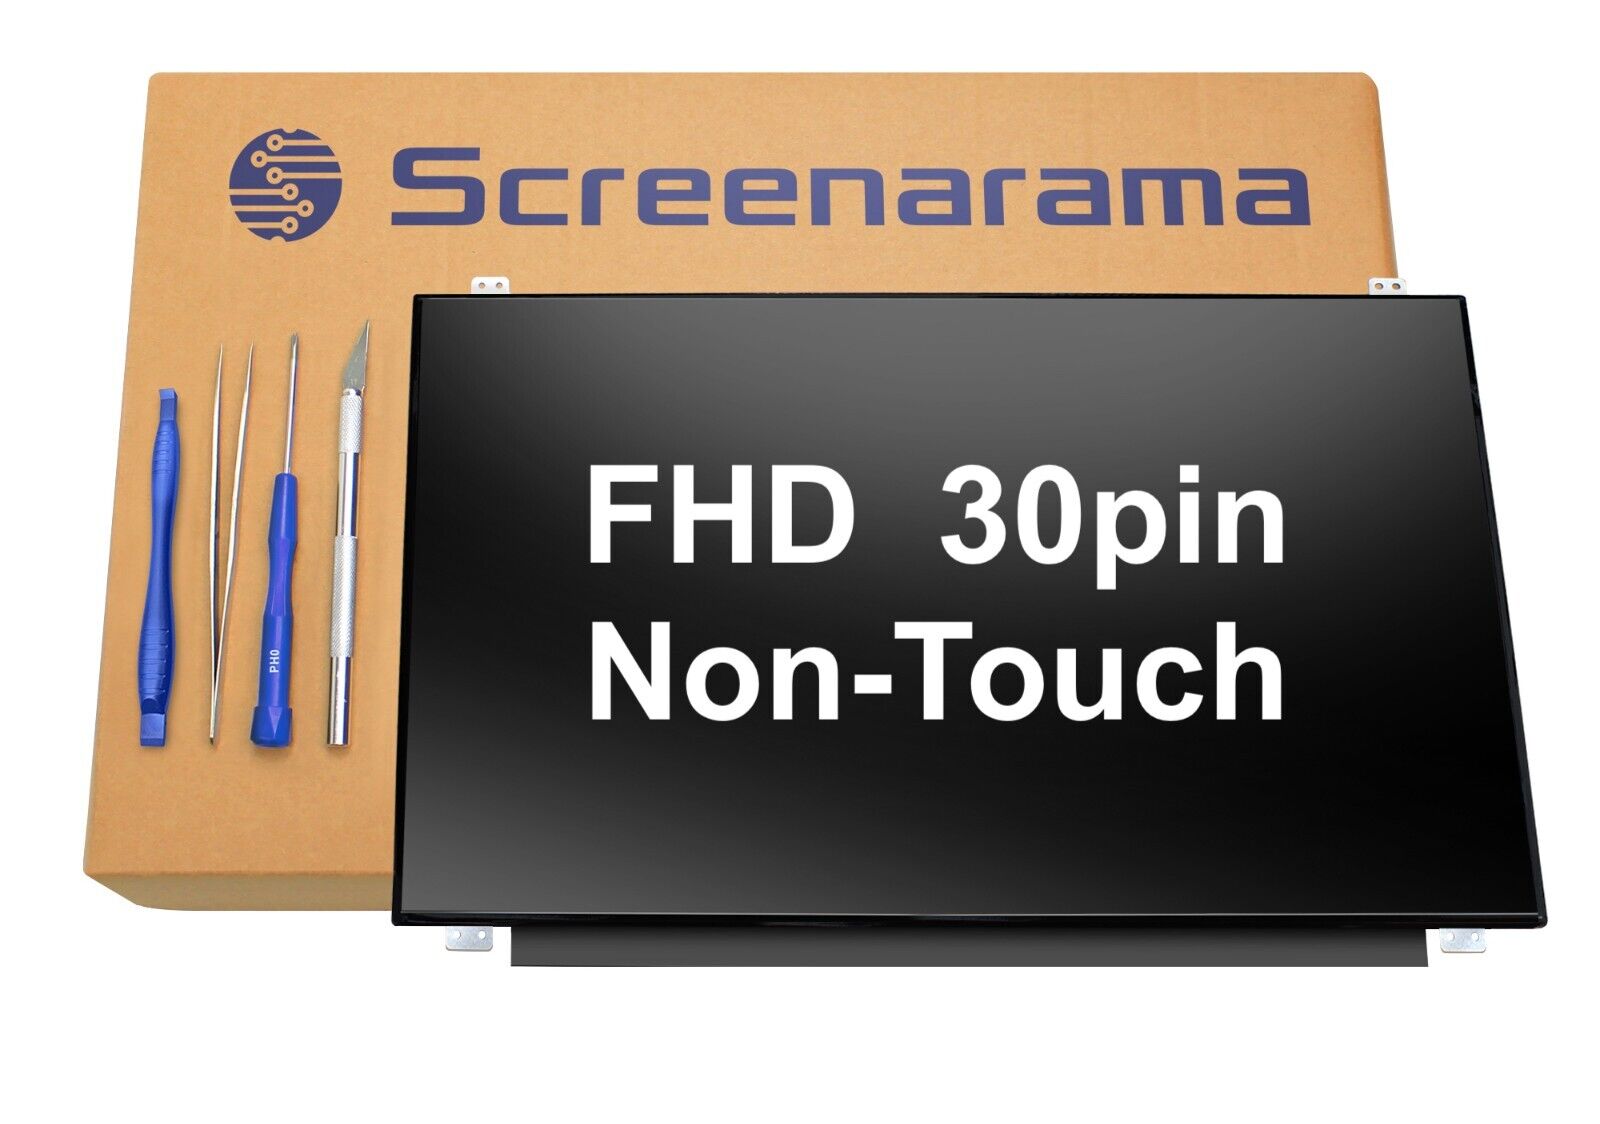 ASUS ROG GL552VW GL552VW-DH71 FHD IPS LED LCD Screen + Tools SCREENARAMA * FAST